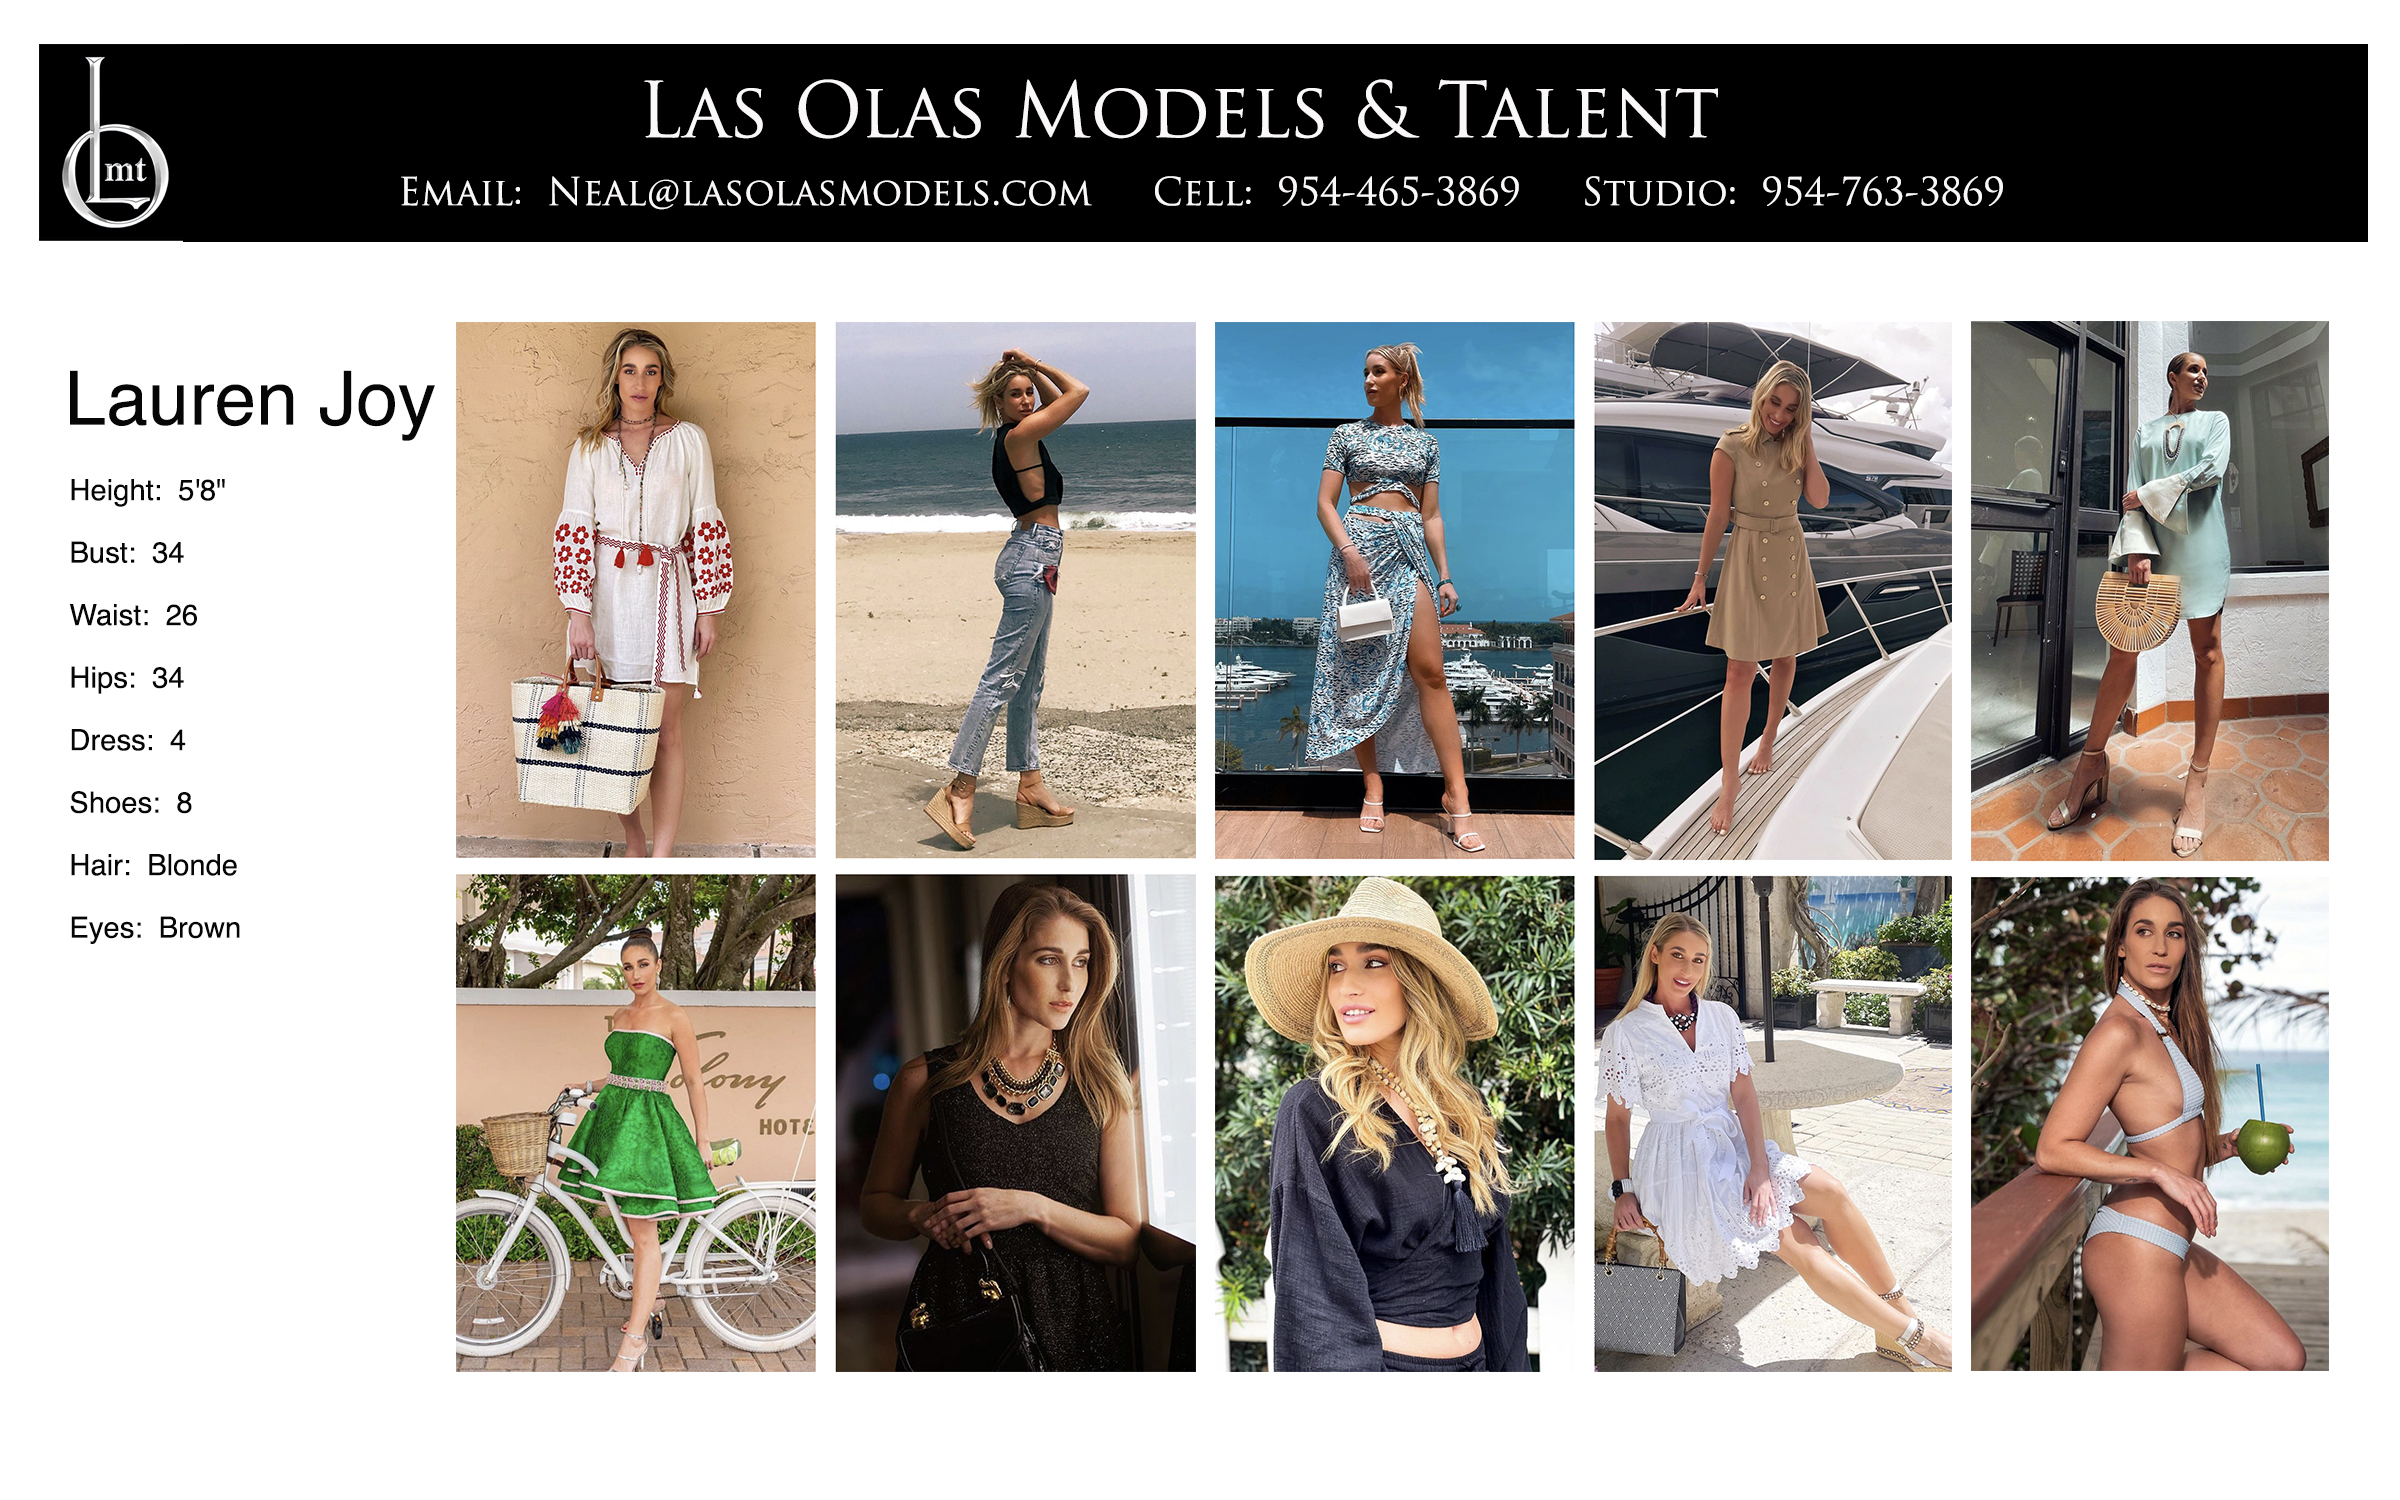 Models Fort Lauderdale Miami South Florida - Print Video Commercial Catalog - Las Olas Models & Talent - Lauren Joy Comp